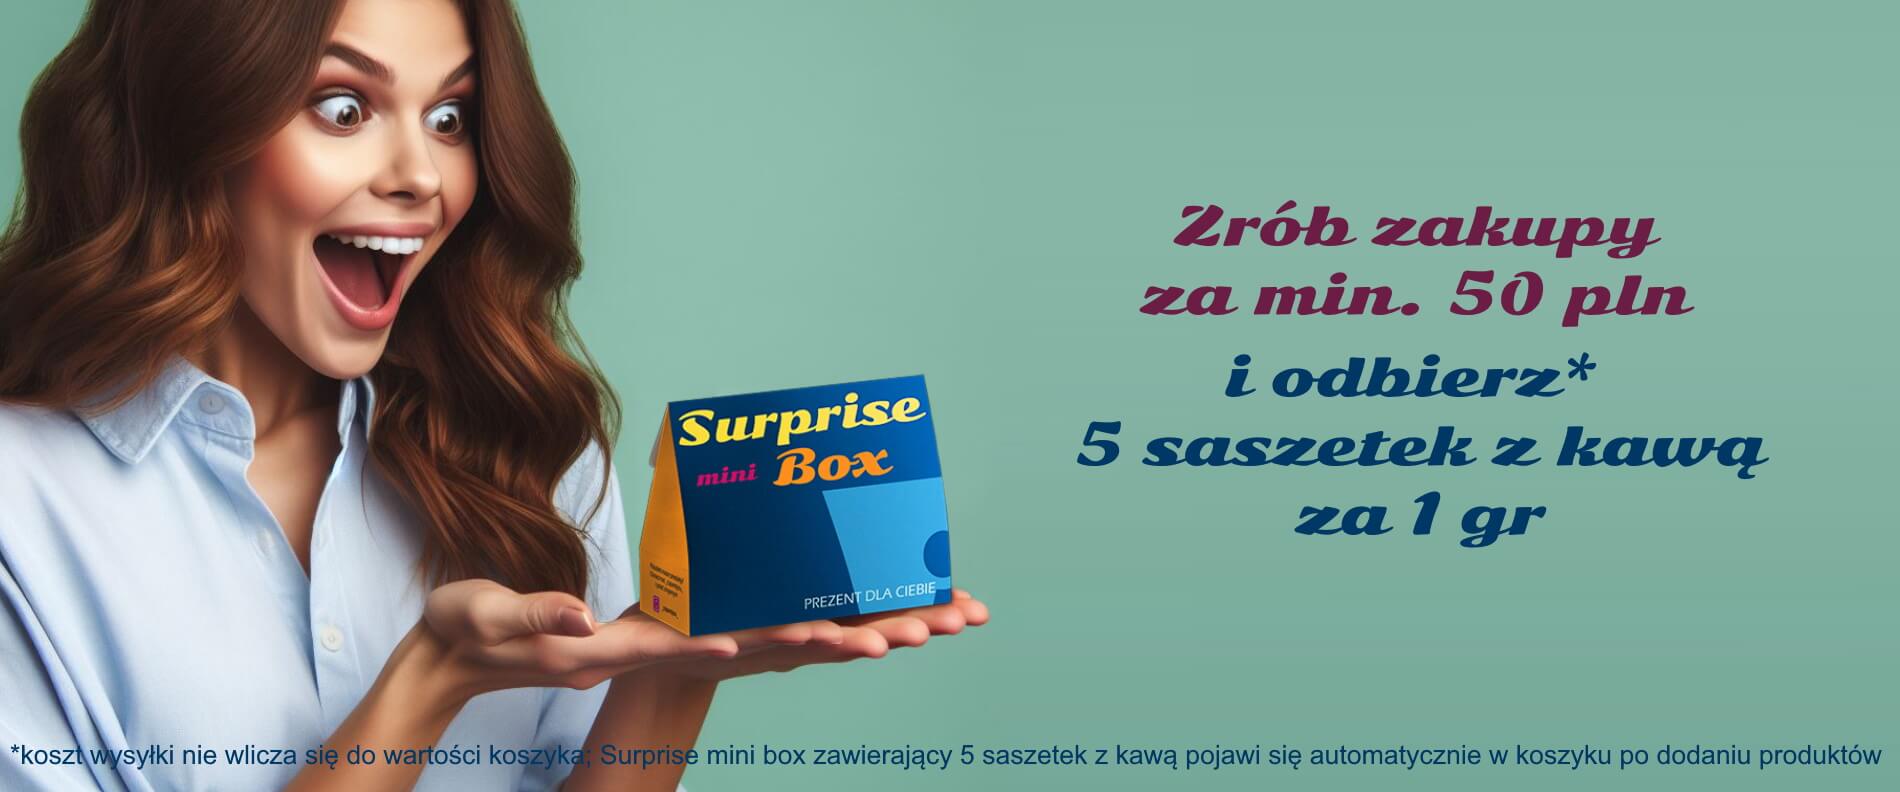 surprise mini box